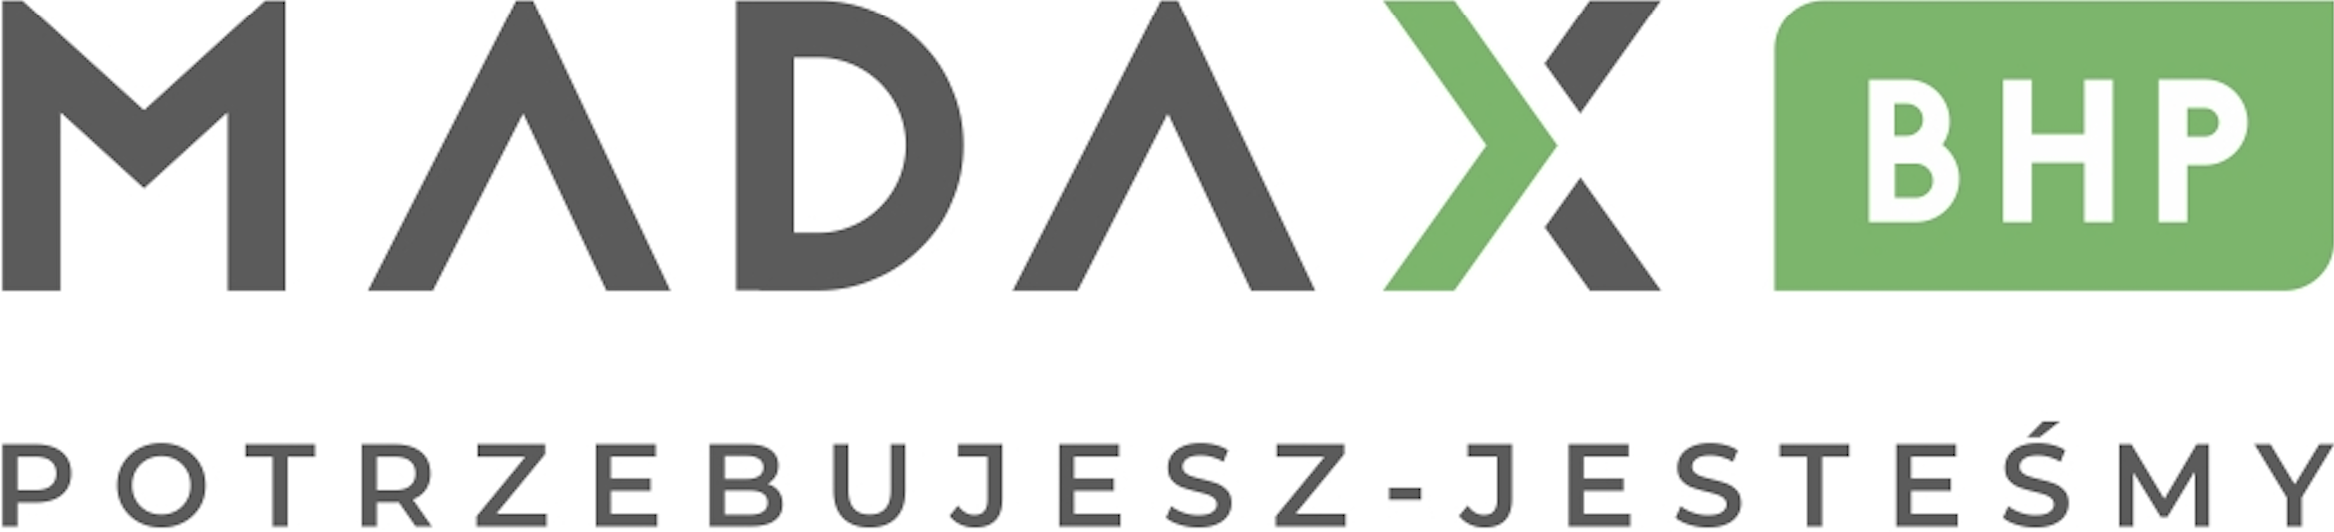 Madax - logo